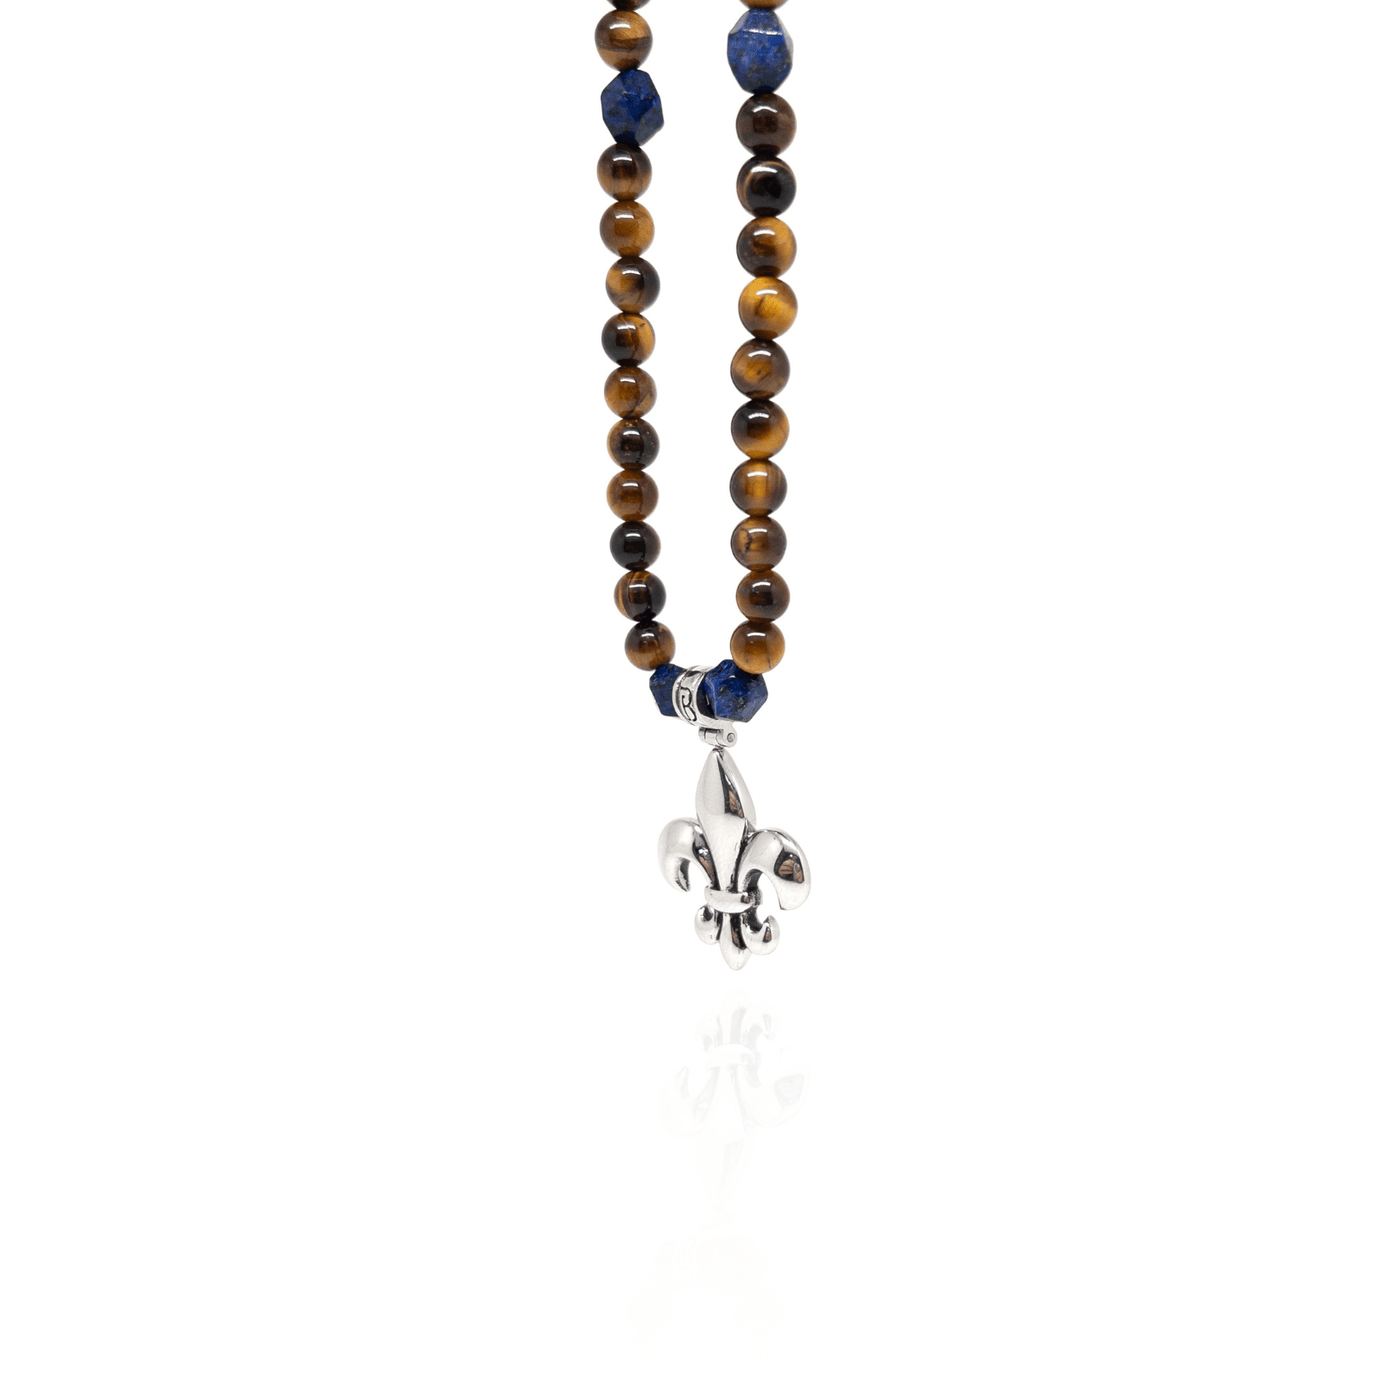 The Lapis Lazuli and Brown Tiger eye Fleur de lis necklace